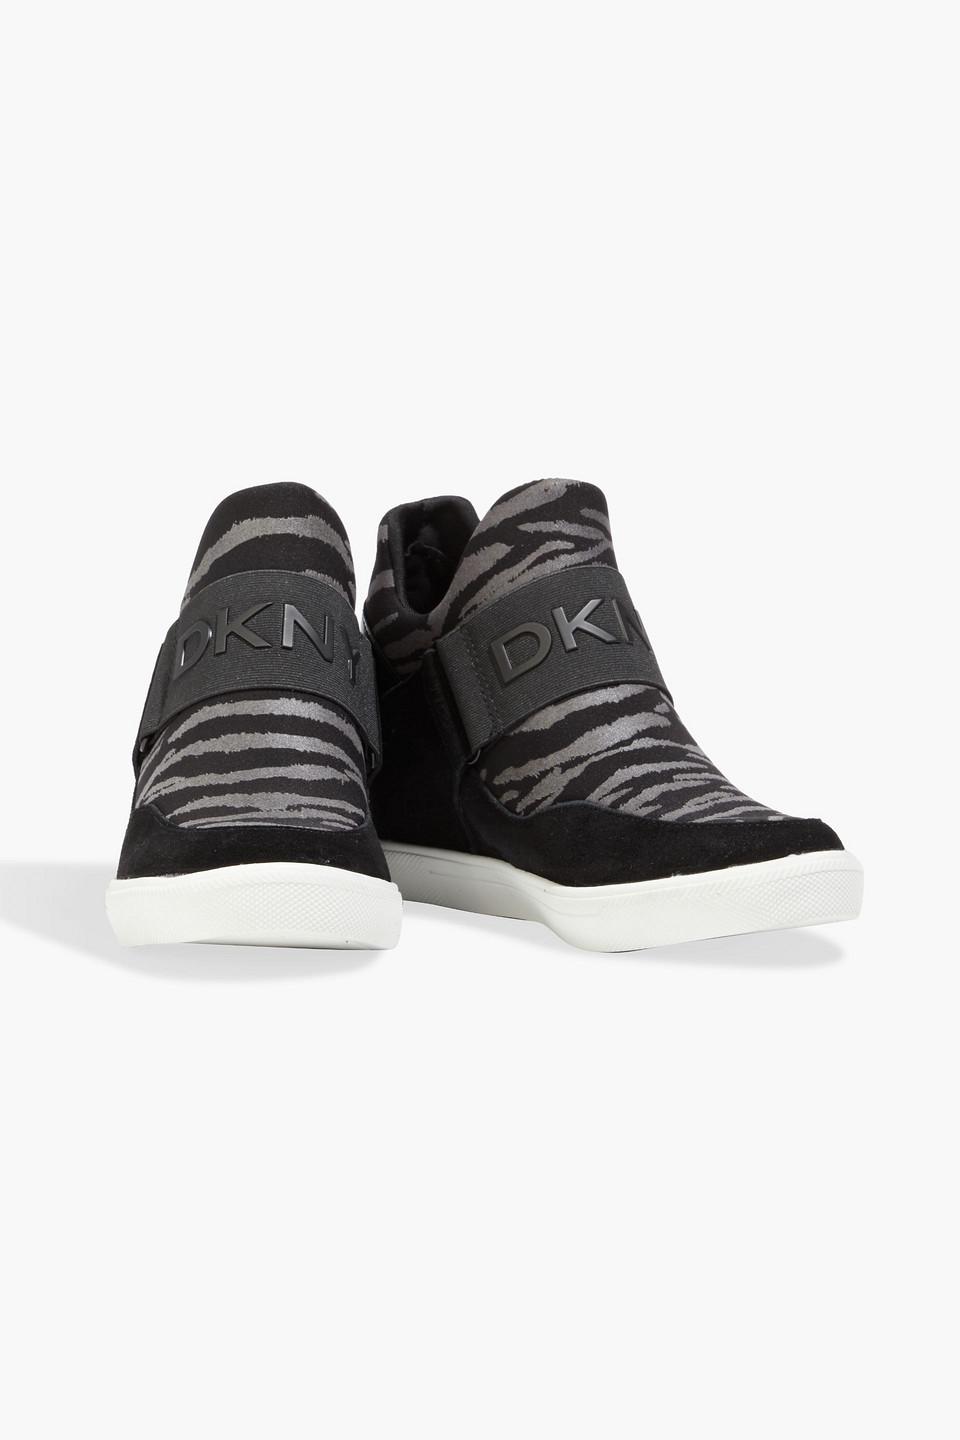 DKNY Cosmos Zebra-print Stretch-knit Wedge Sneakers in Black | Lyst